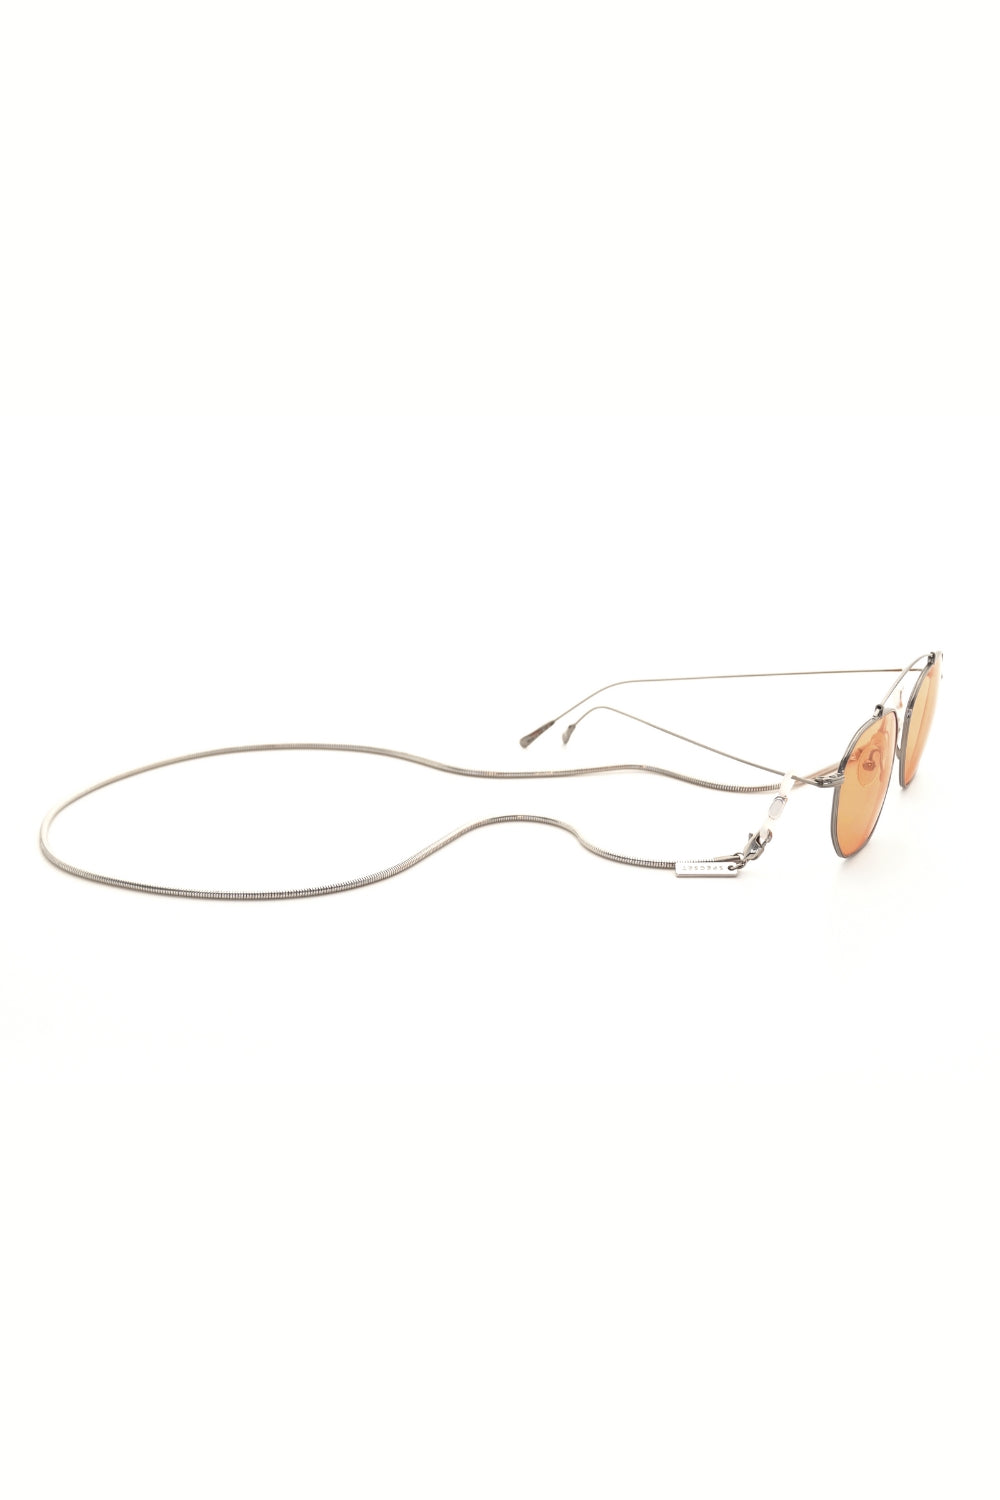 SNAKY - Fine Snakeskin Eyewear Chain - Silver | SPECSET